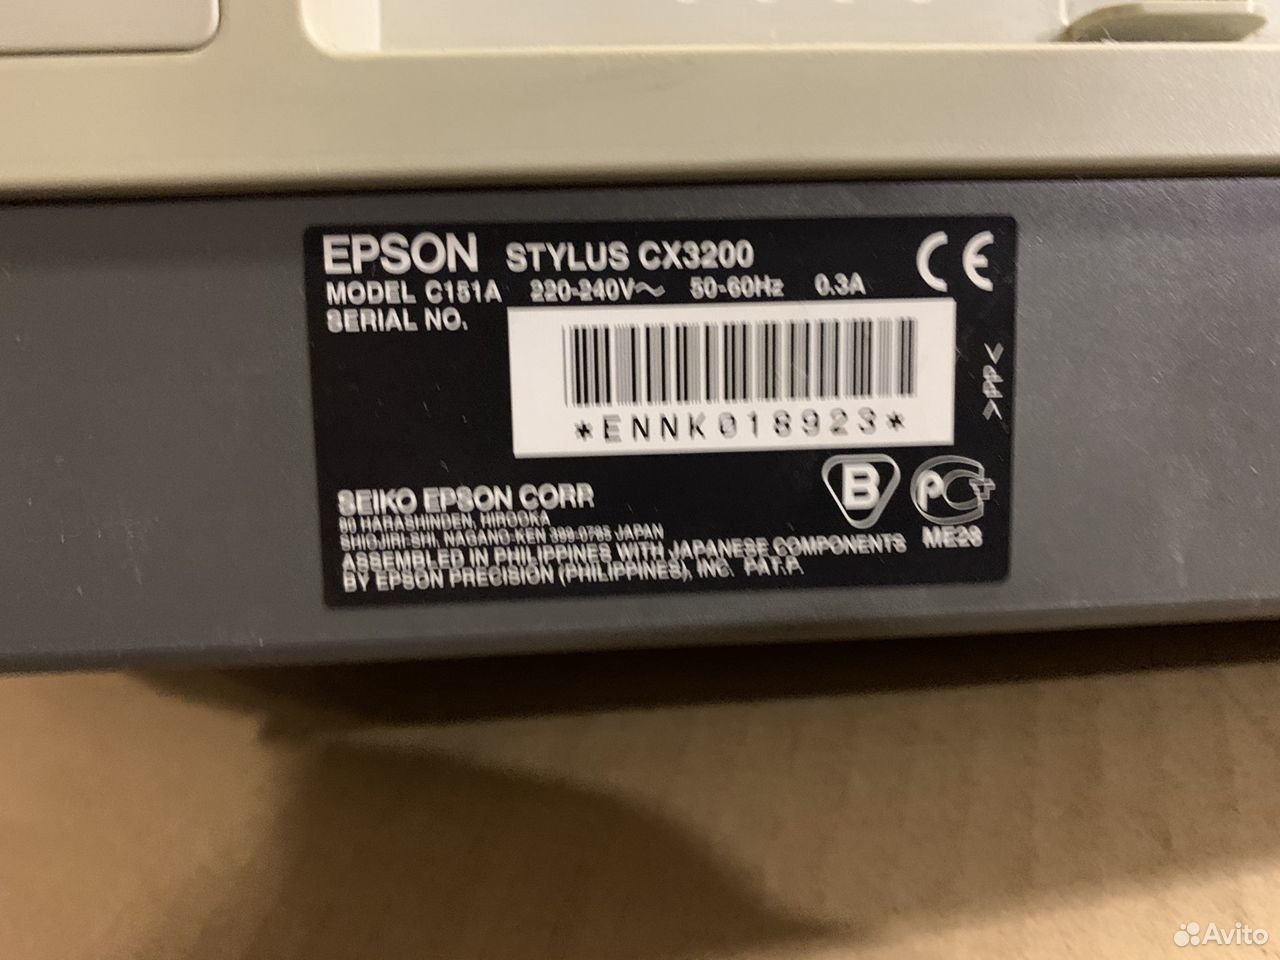  Epson cx3200 мфу принтер, сканер, ксерокс  89996442855 купить 1